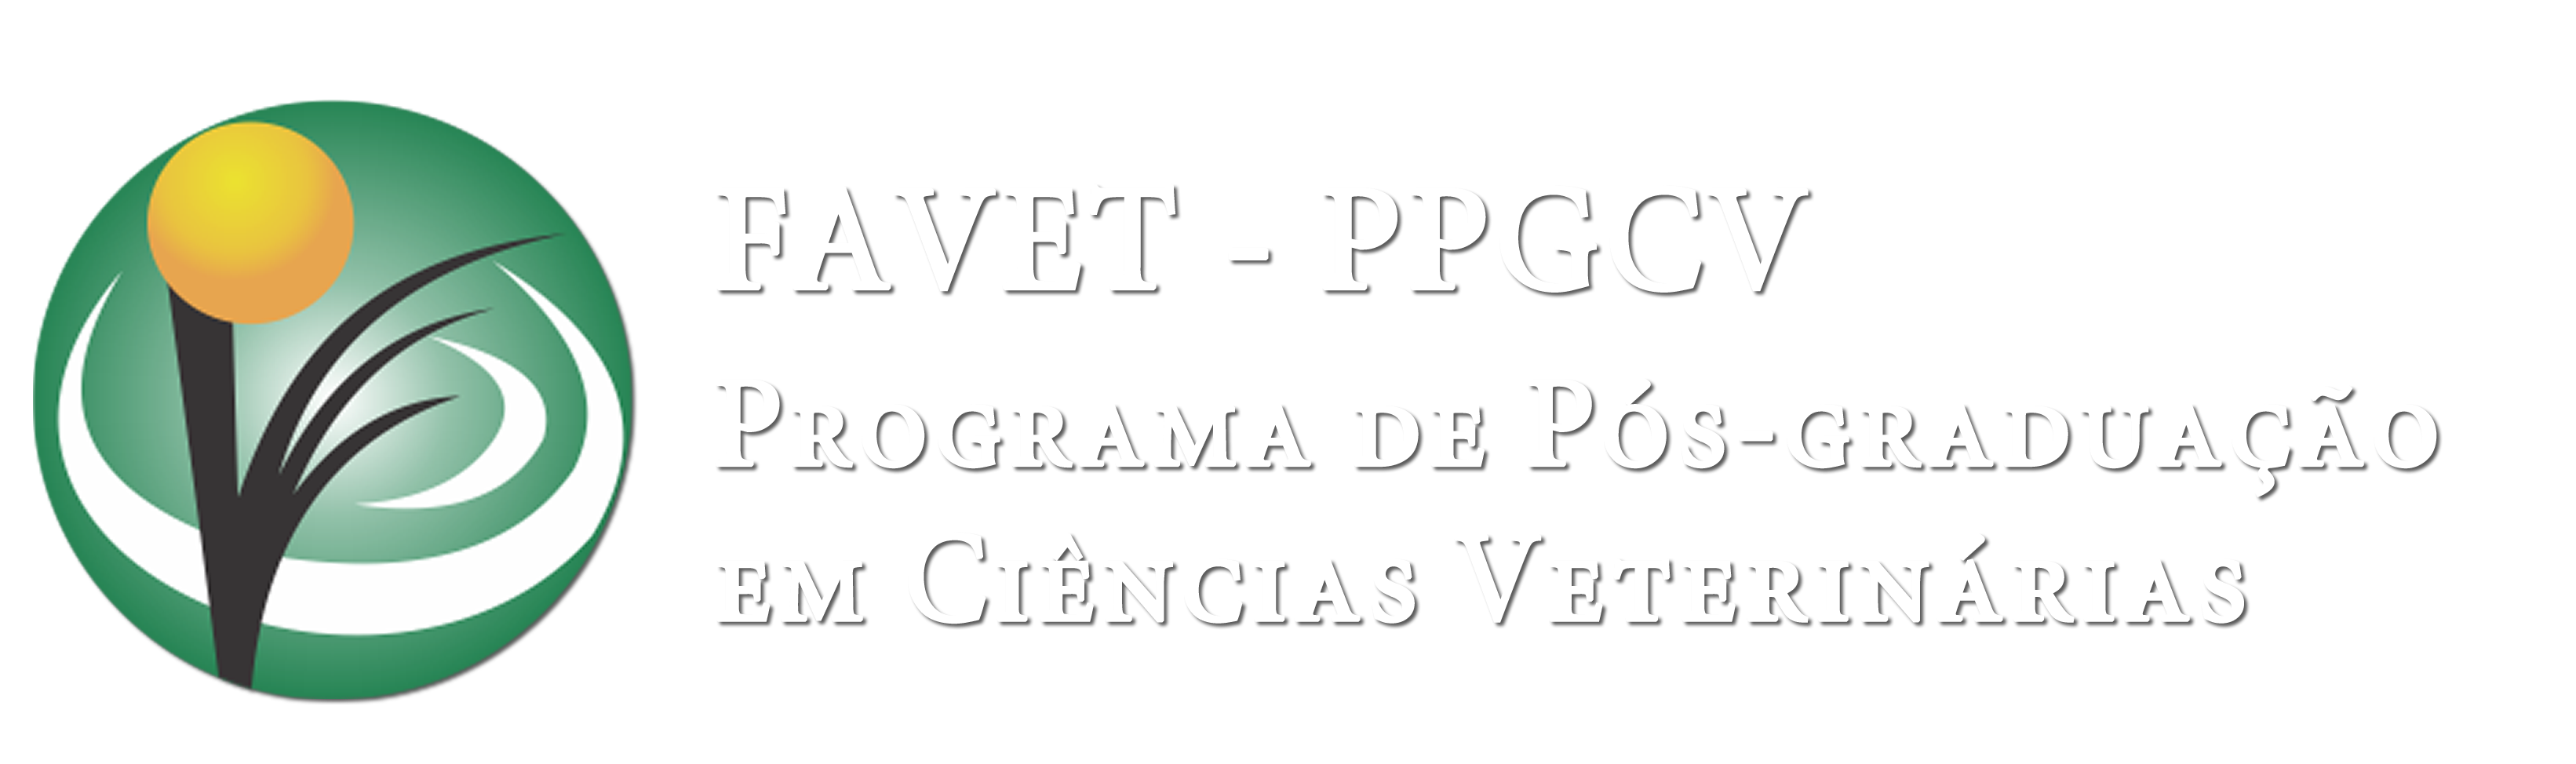 logo superior ppgcv